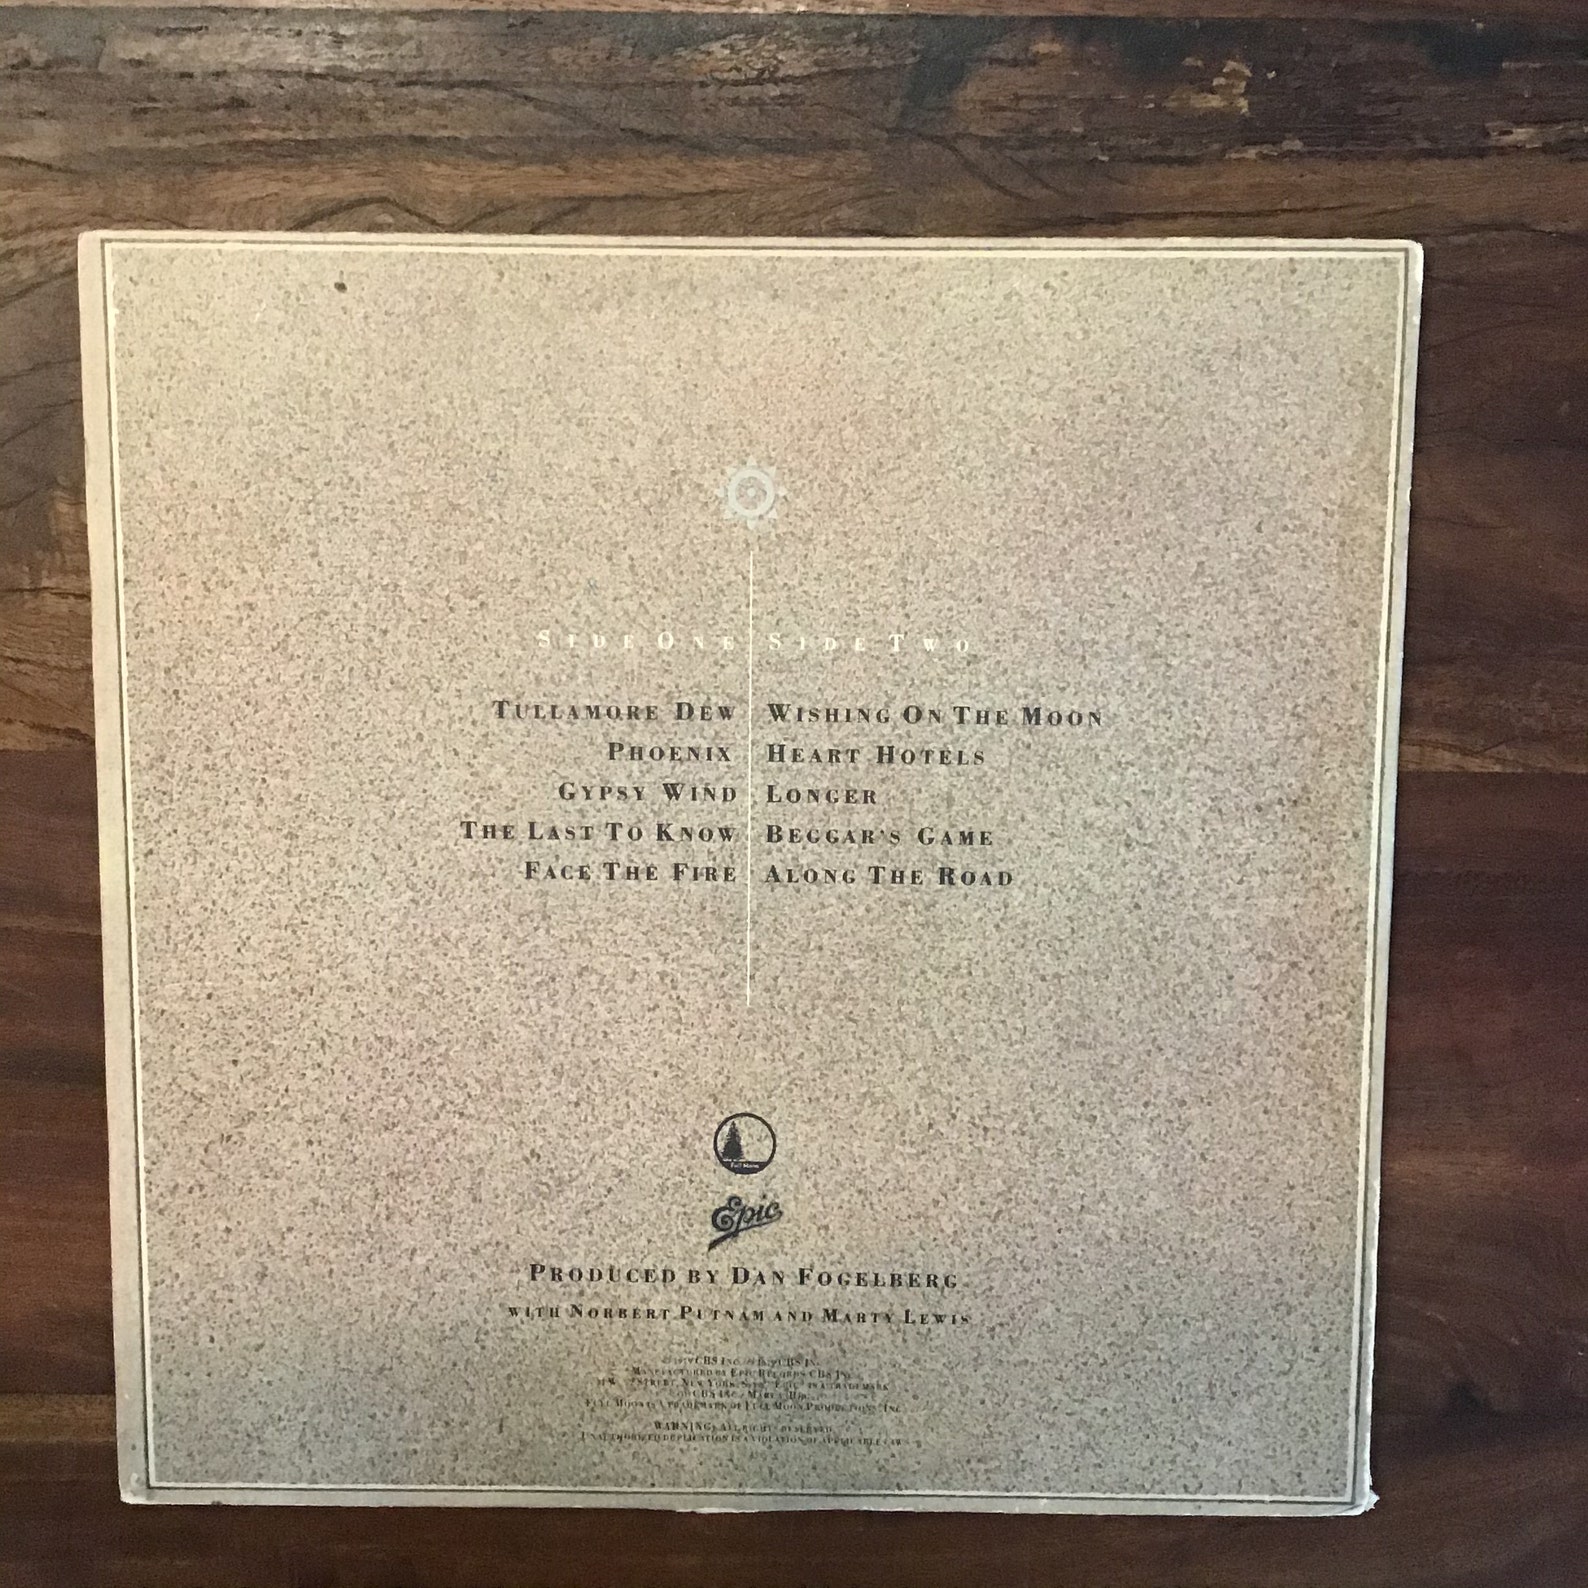 Dan Fogelberg Vinyl Album | Etsy